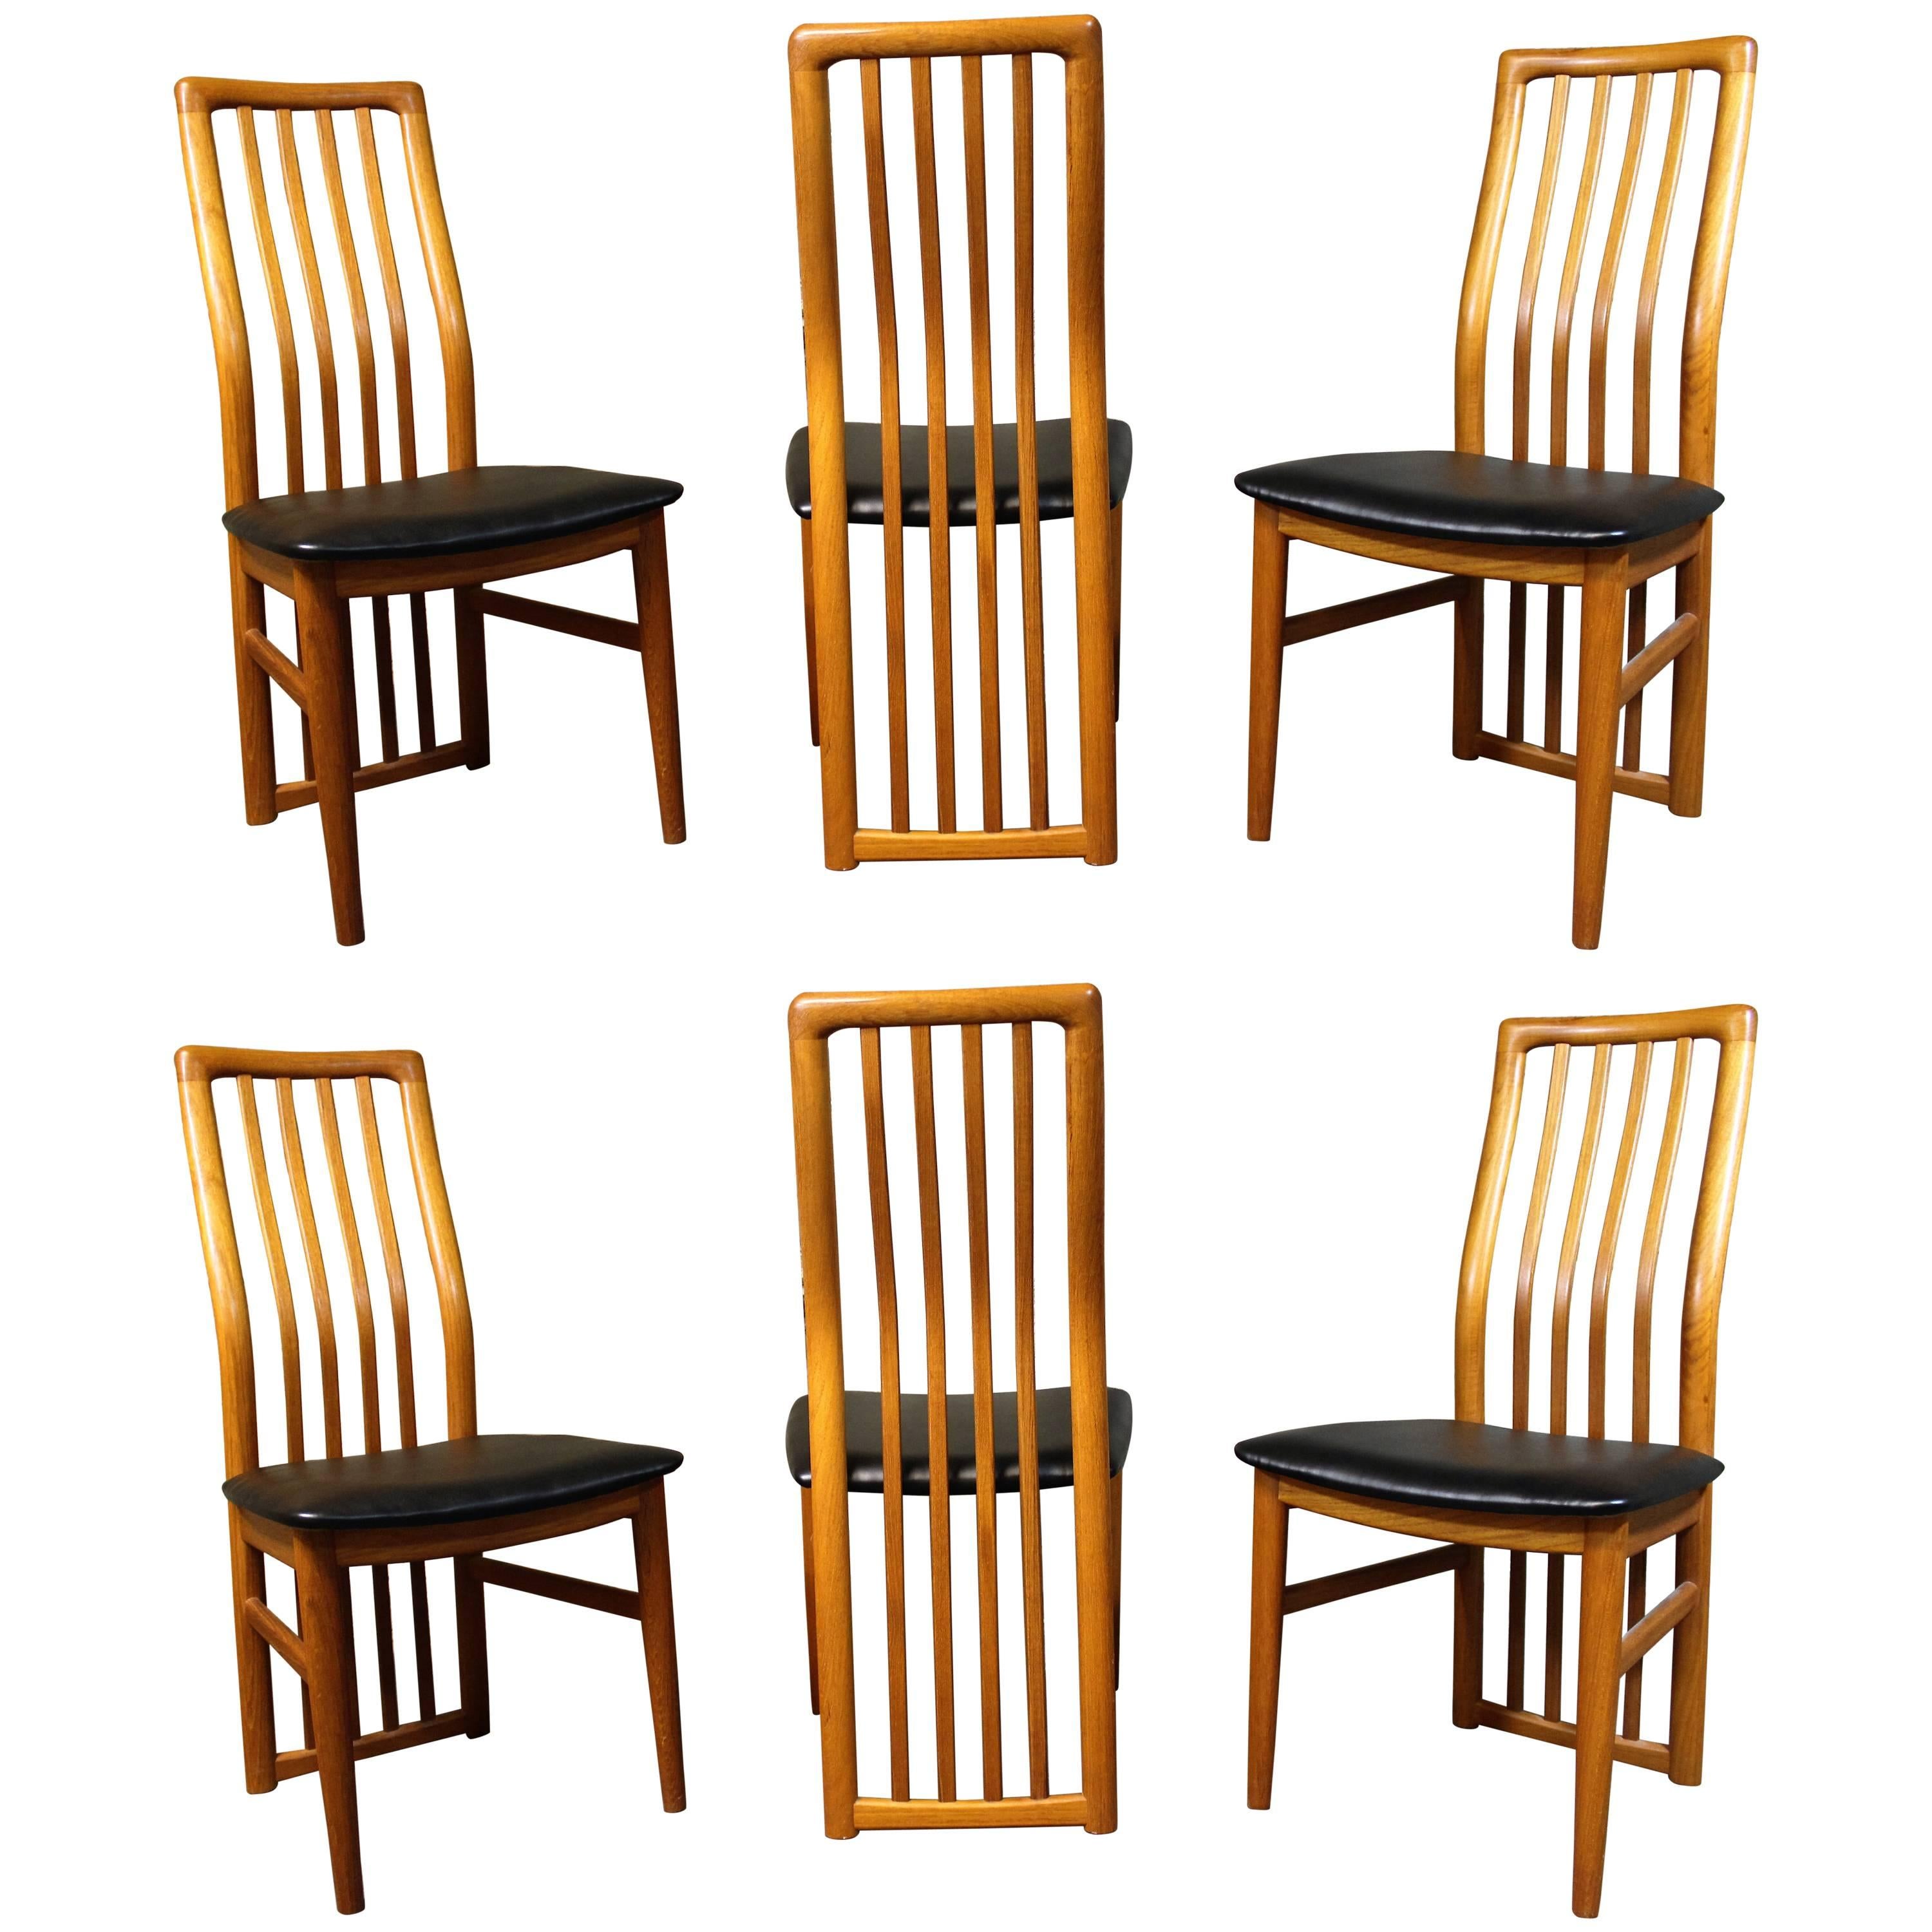 Six Kai Kristiansen Teak Dining Room Chairs for Schou Andersen, Danish Modern